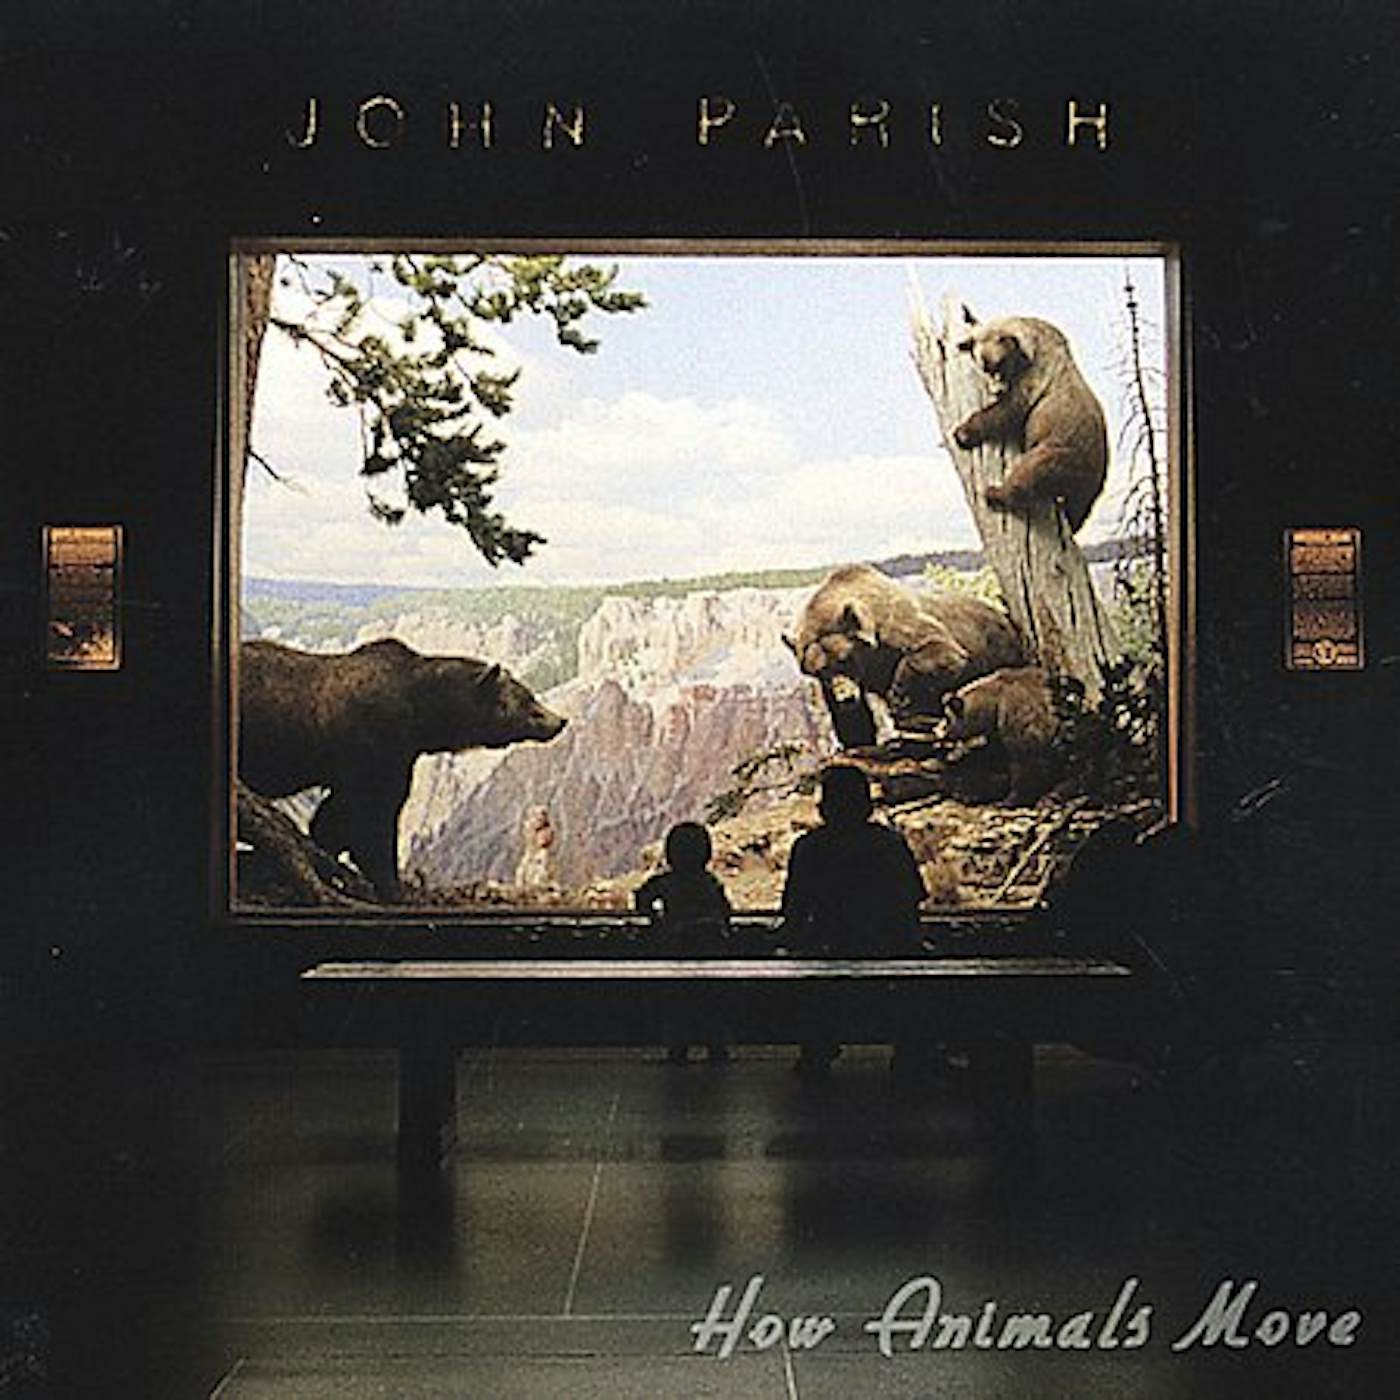 John Parish How Animals Move Vinyl Record